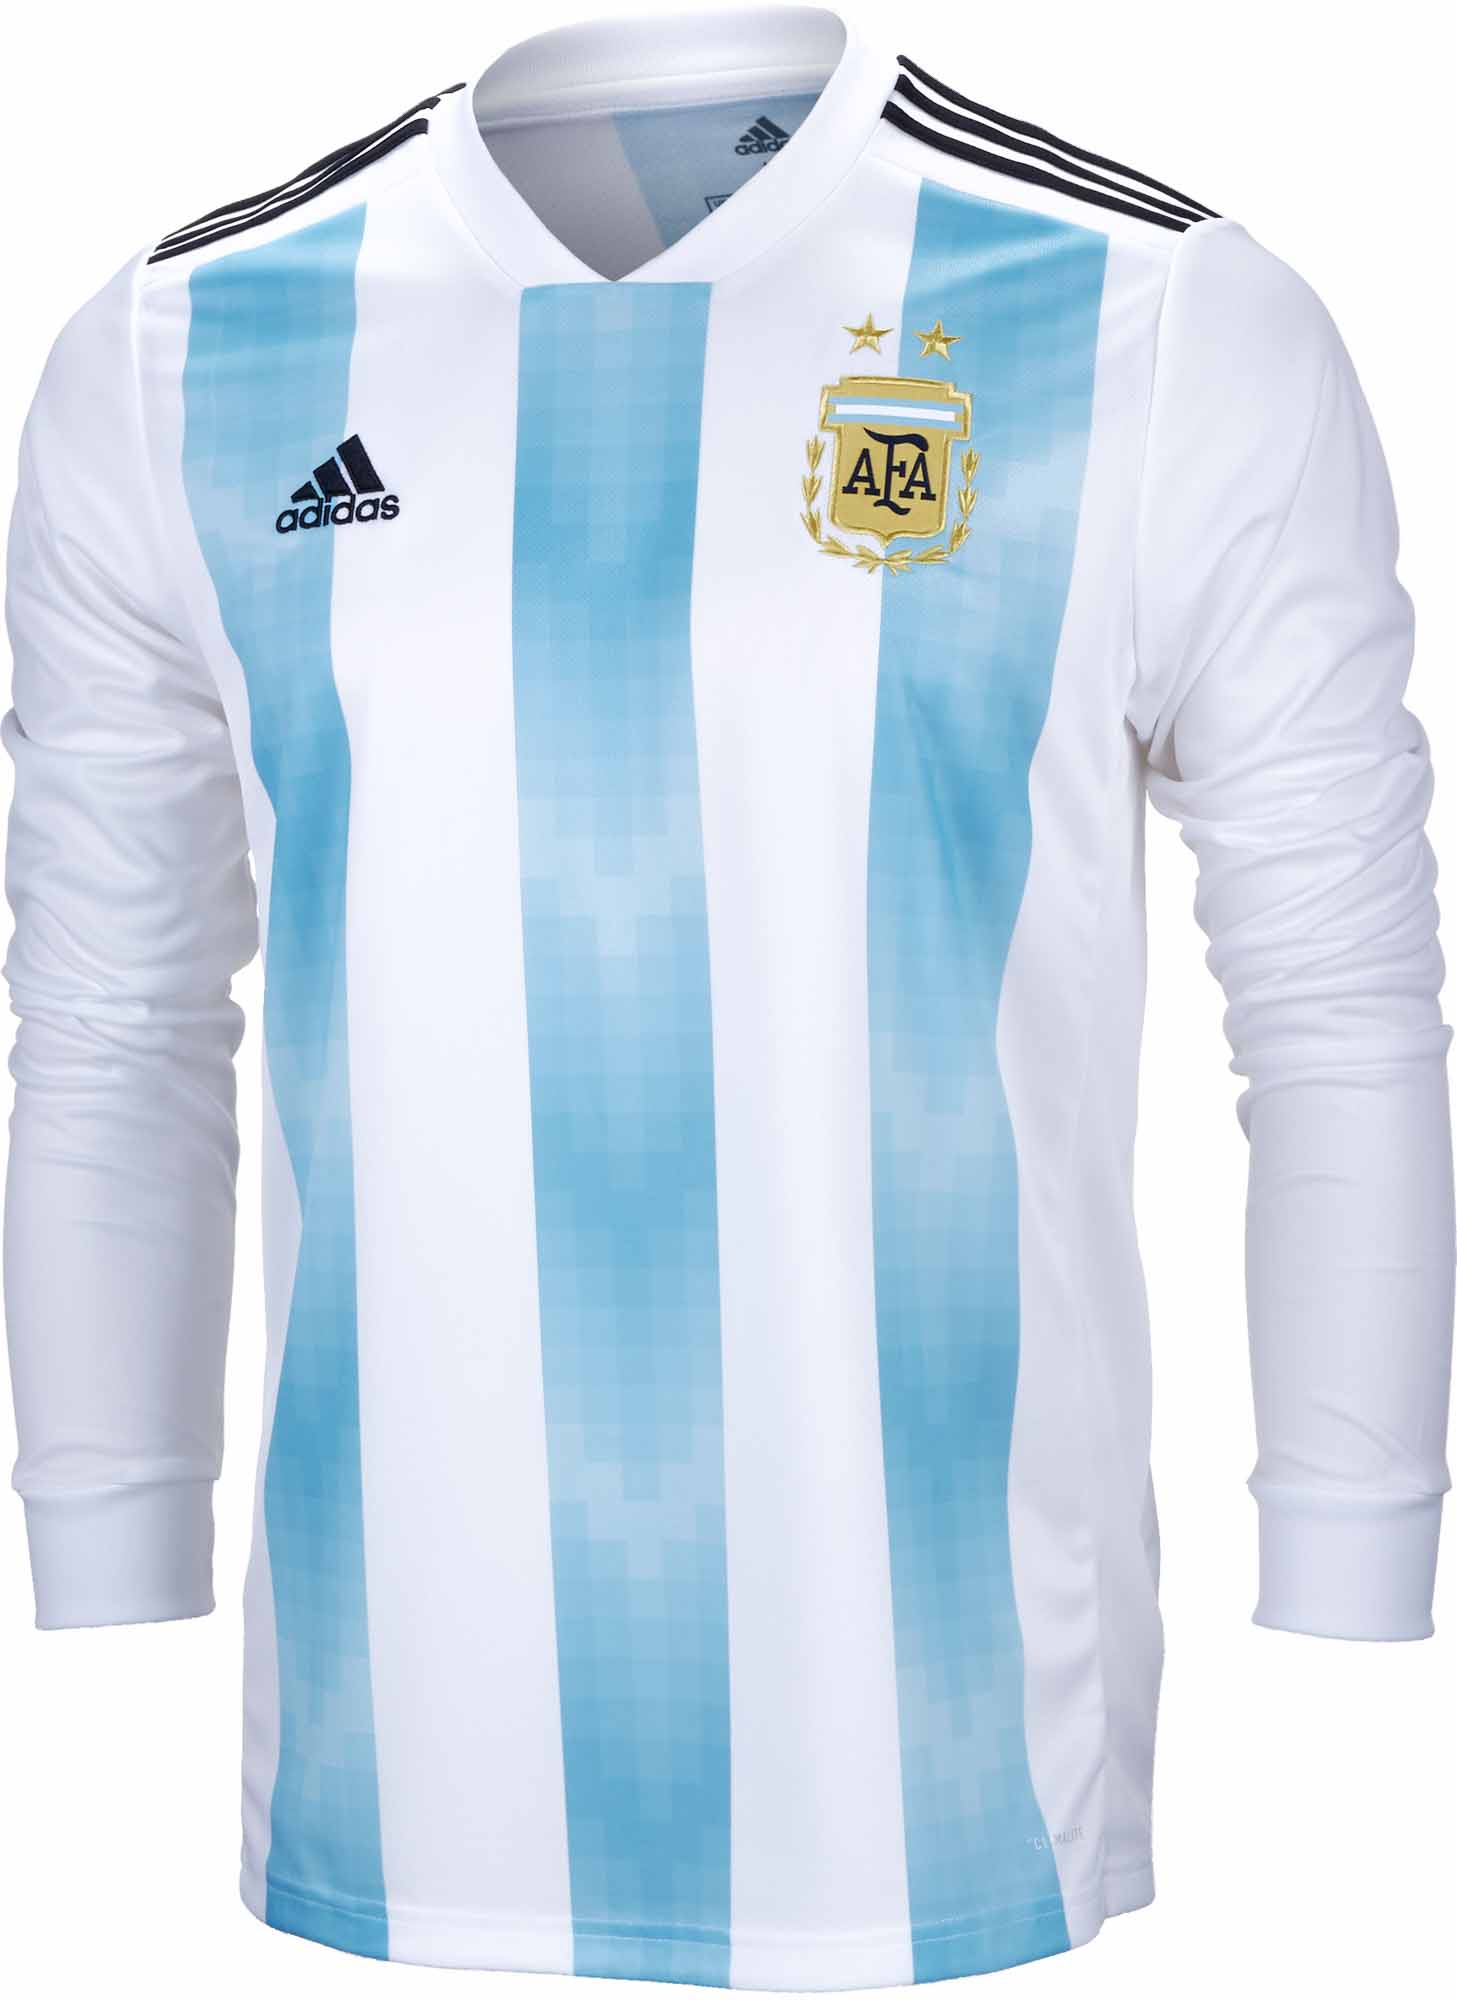 argentina jersey soccer